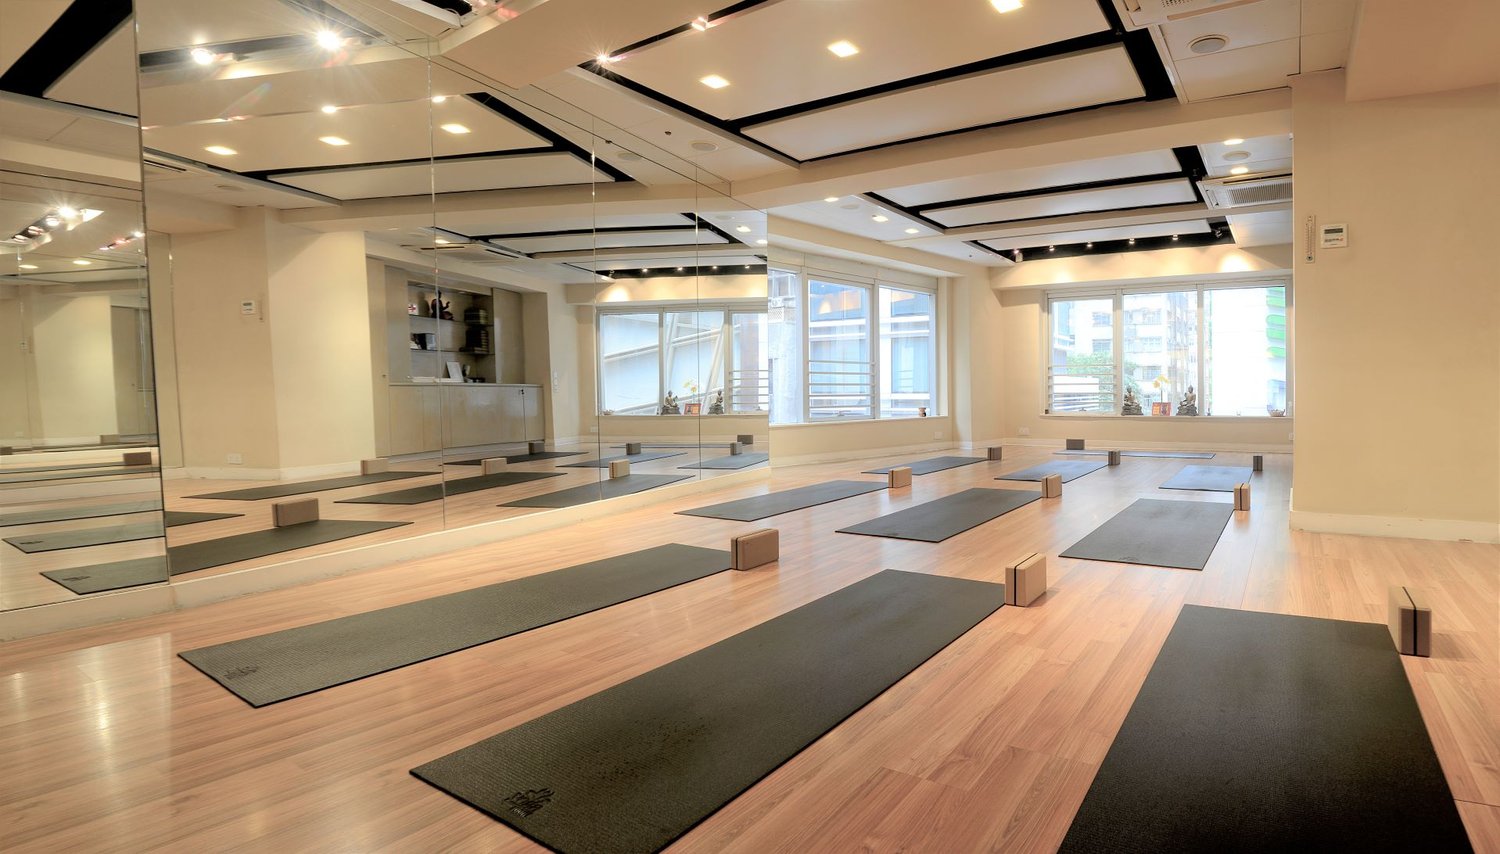 The Yoga Room - Over 100 Yoga Classes Per WeekYoga Room Hong Kong